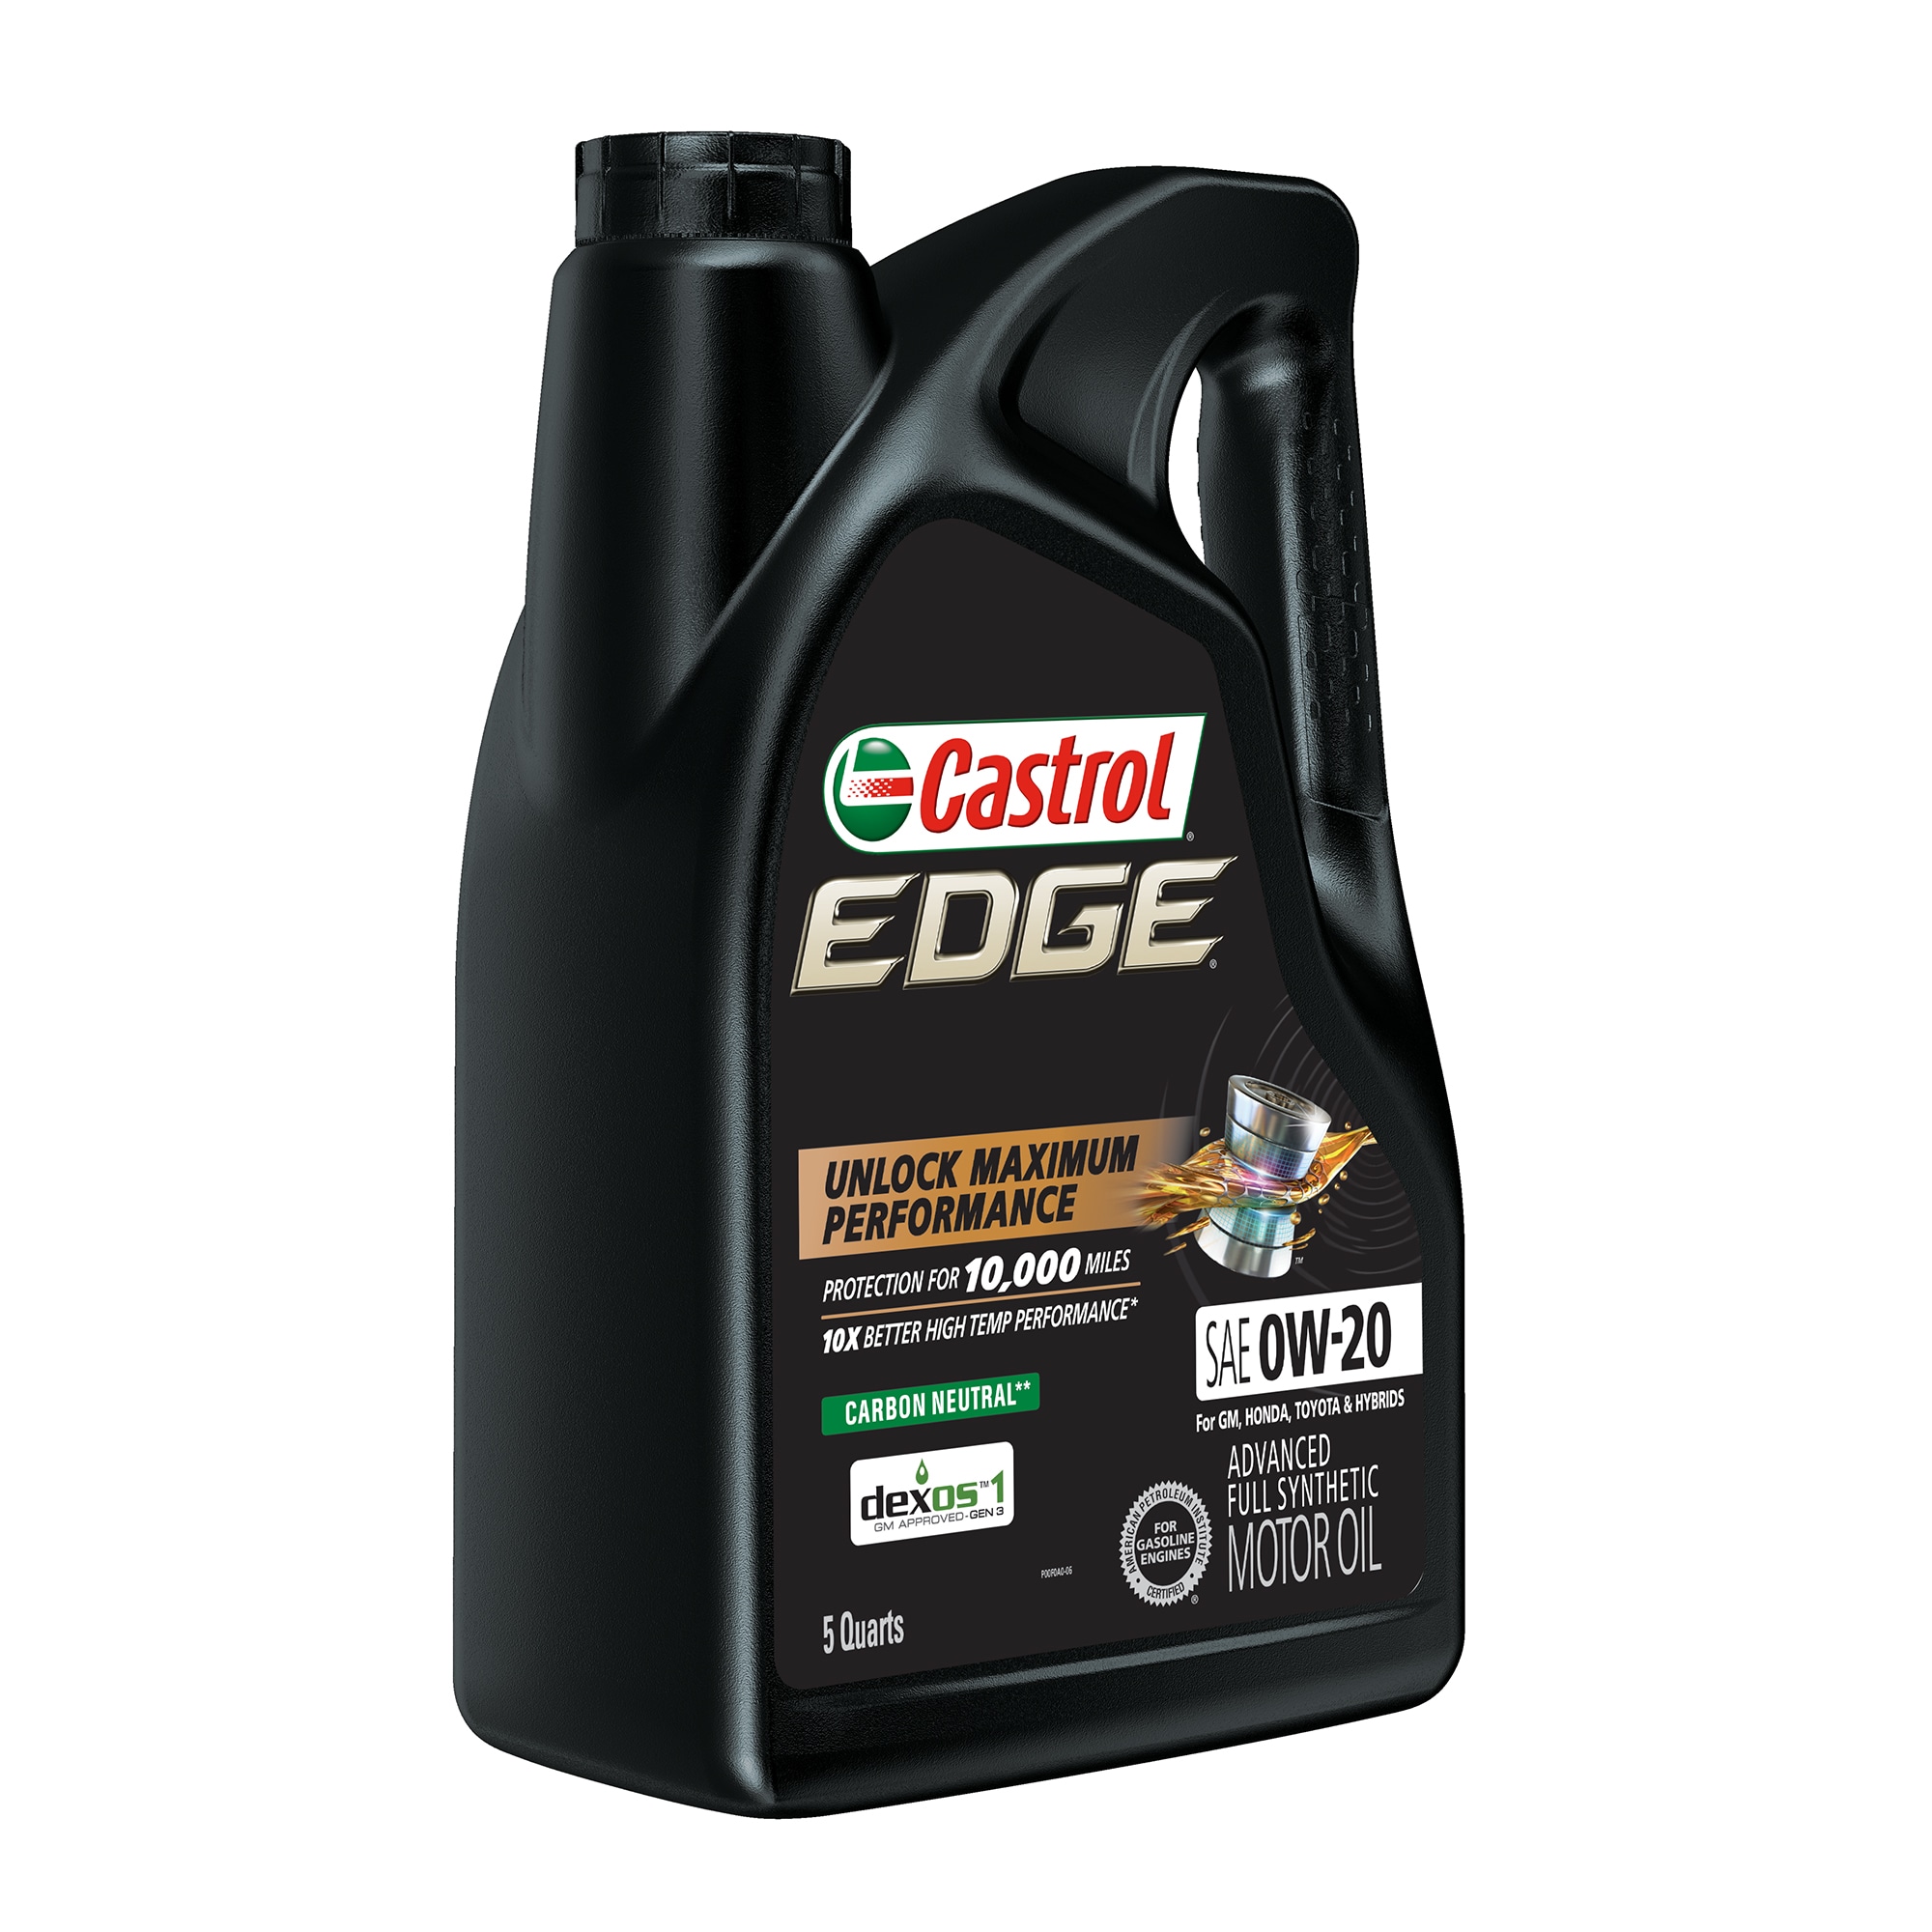 CASTROL EDGE 0W-20 Advanced Full Synthetic Motor Oil, 5 Quarts in